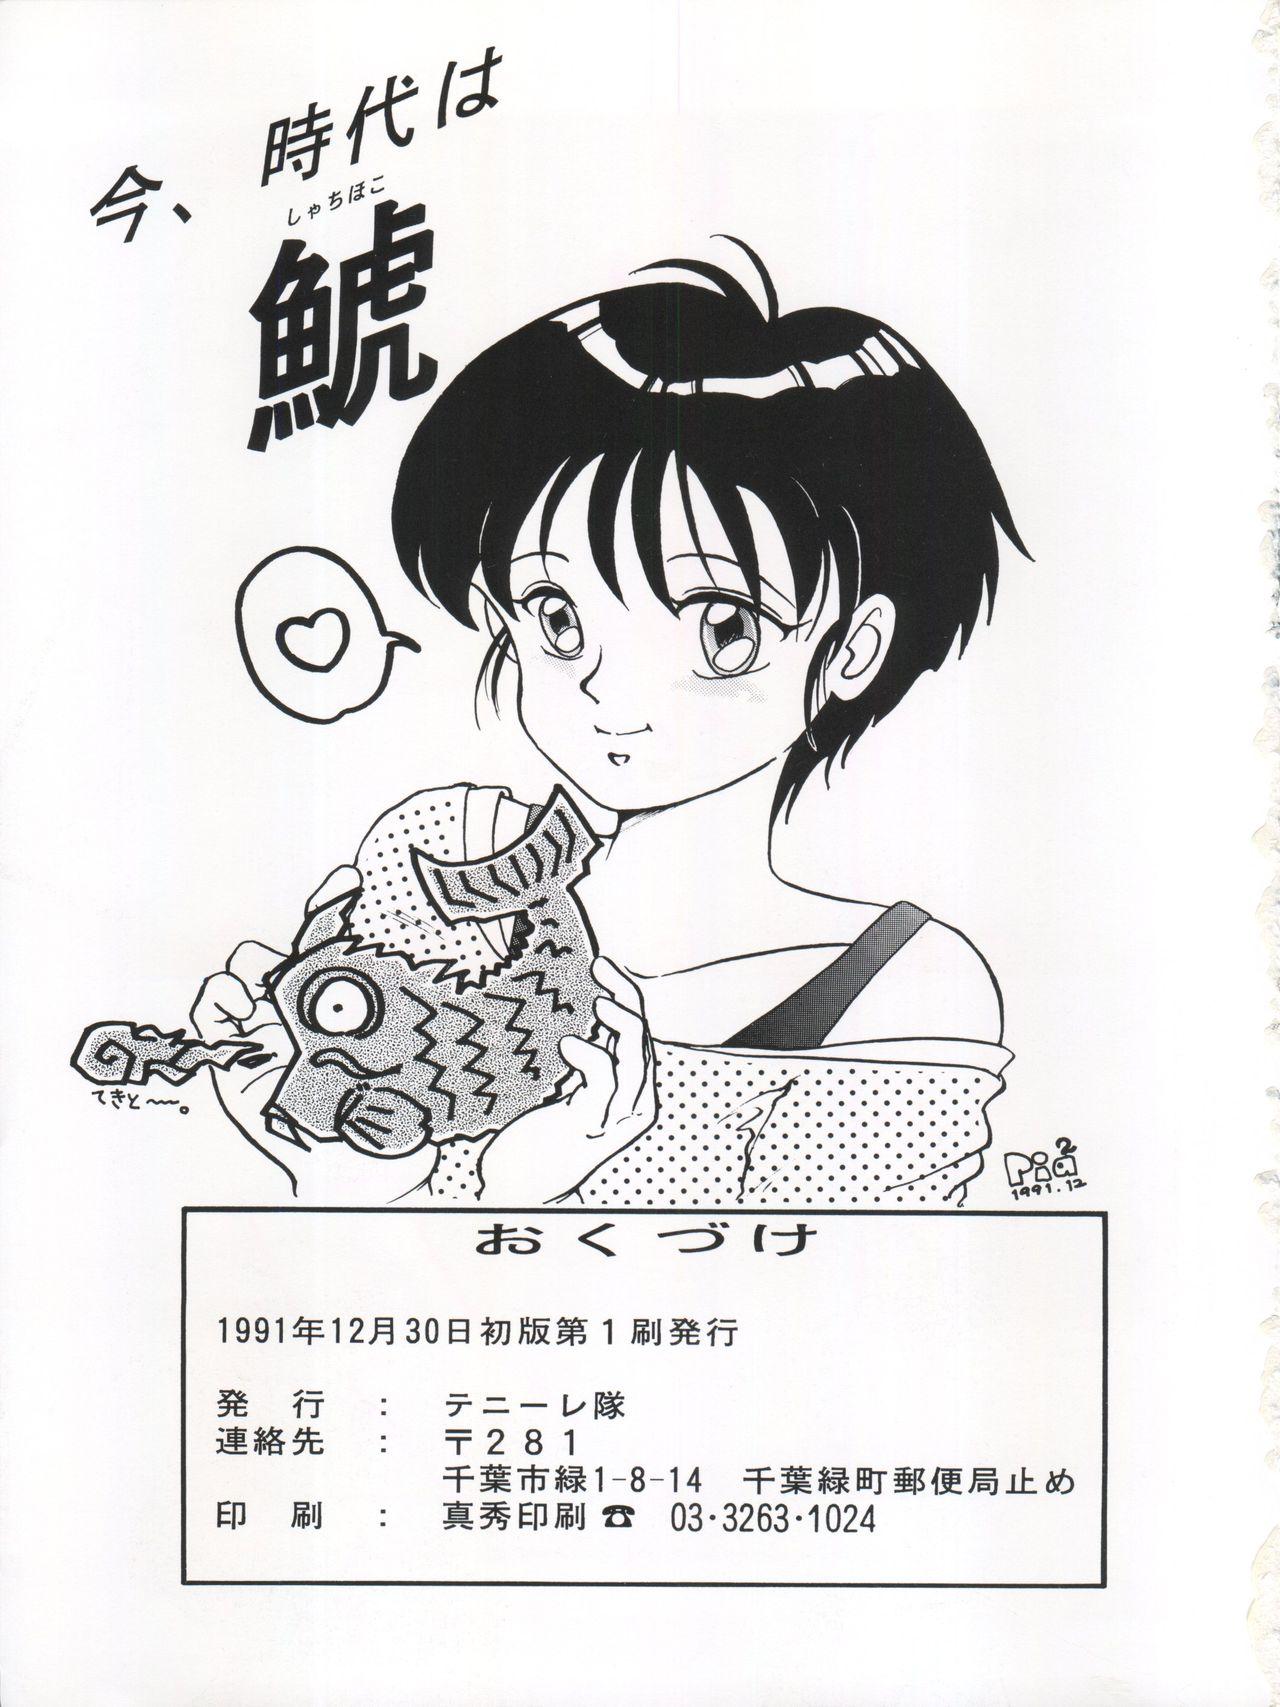 Best Blow Job 逮捕されちゃうぞ - Fushigi no umi no nadia Youre under arrest Minky momo 3x3 eyes Chick - Page 47